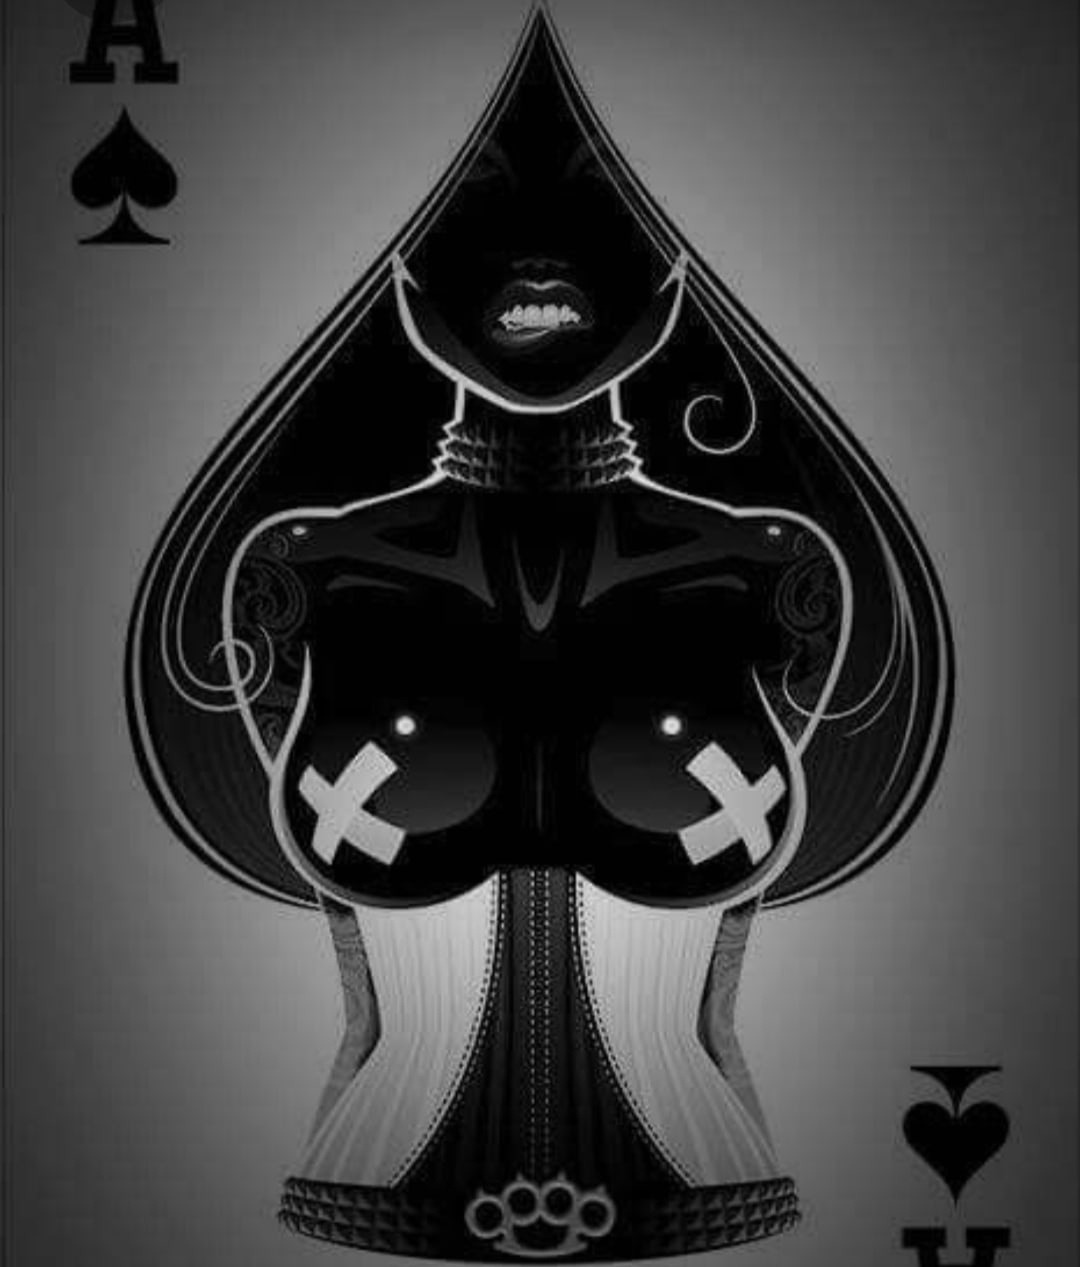 Queen of spades artwork